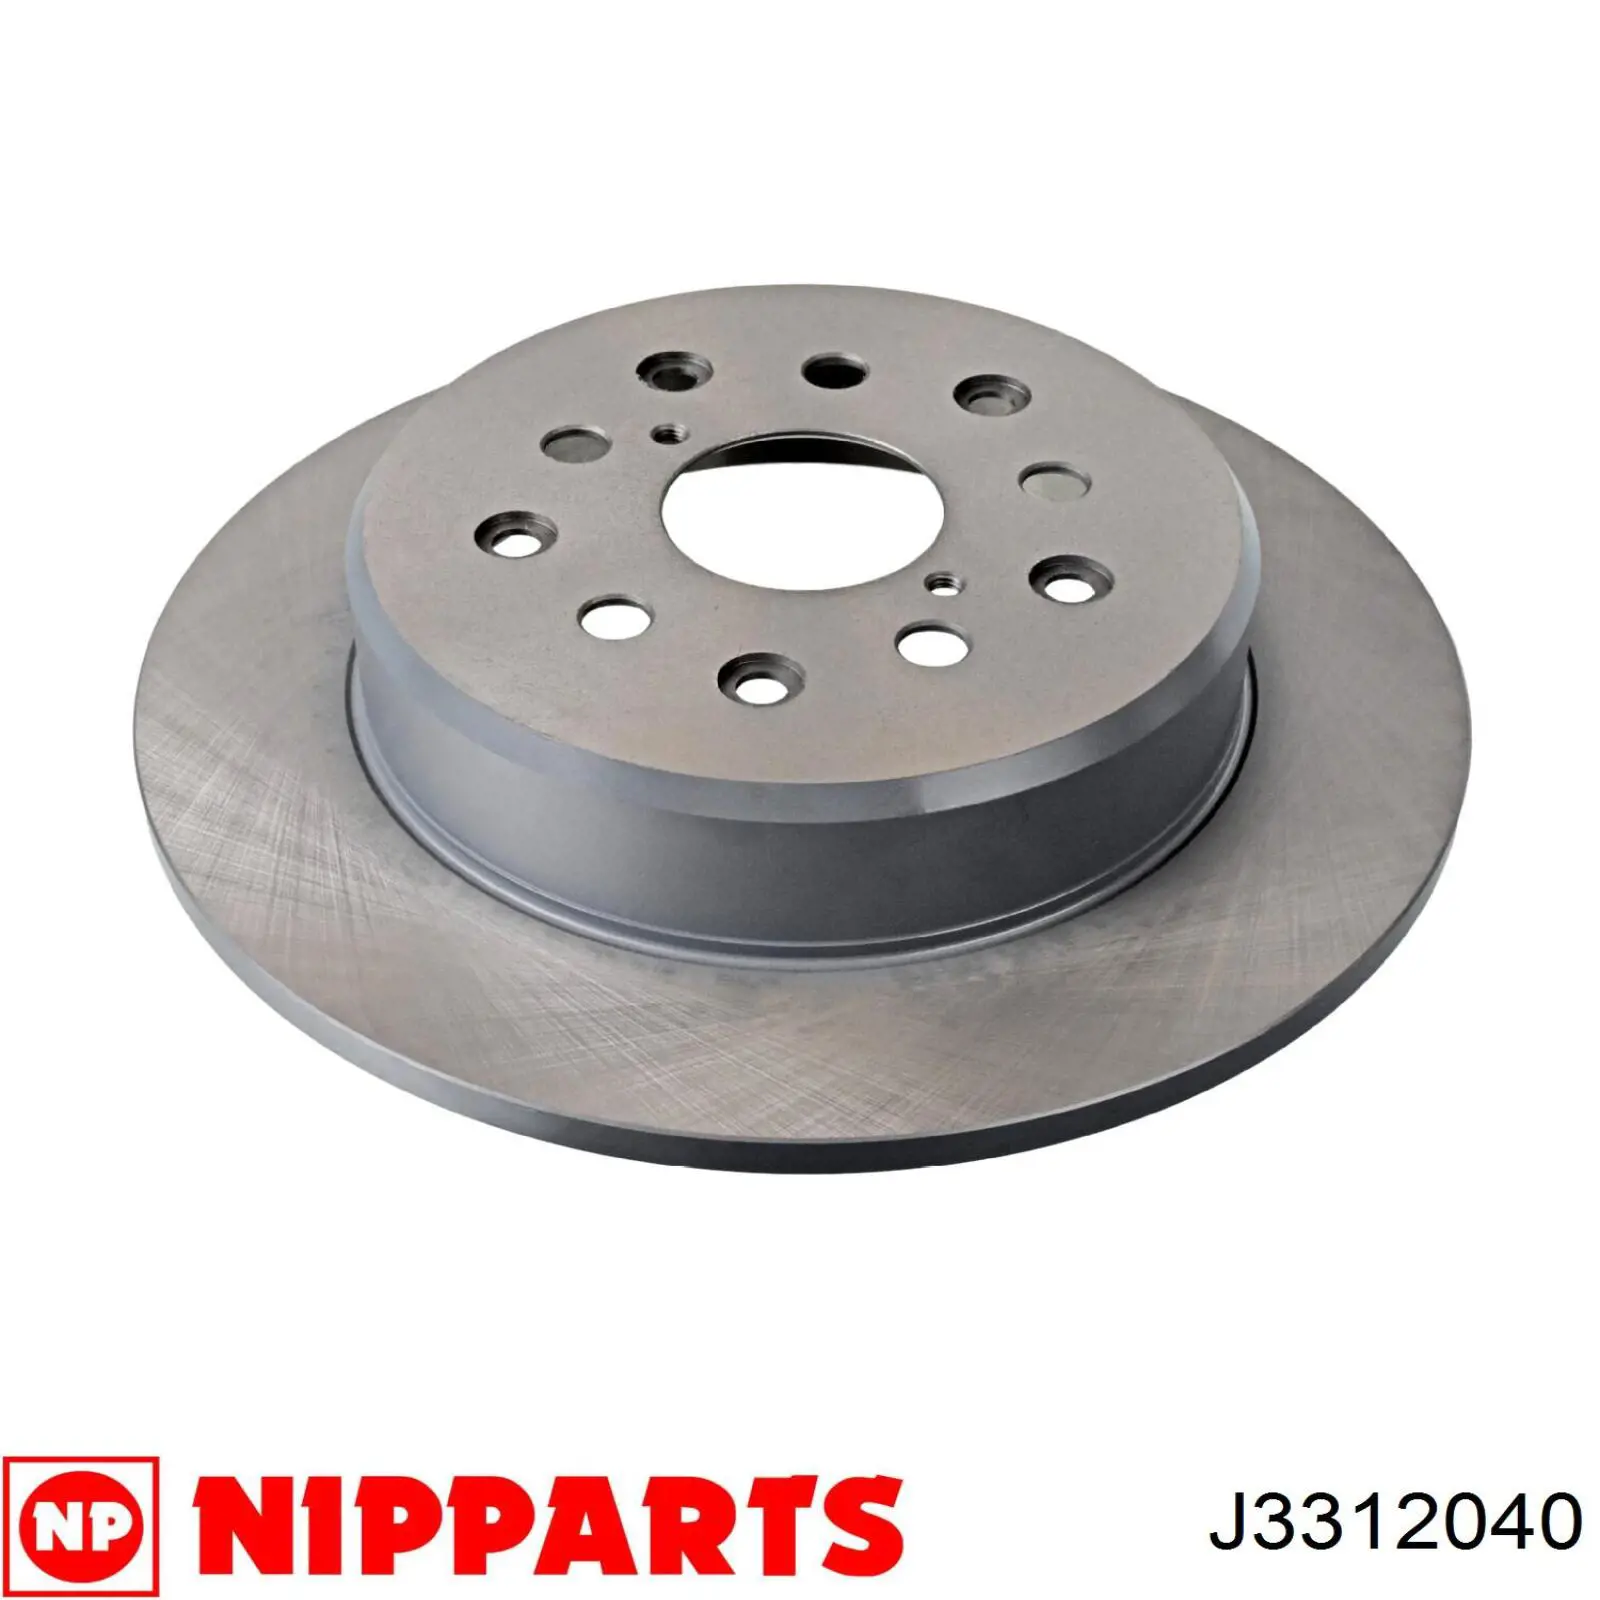 J3312040 Nipparts disco de freno trasero